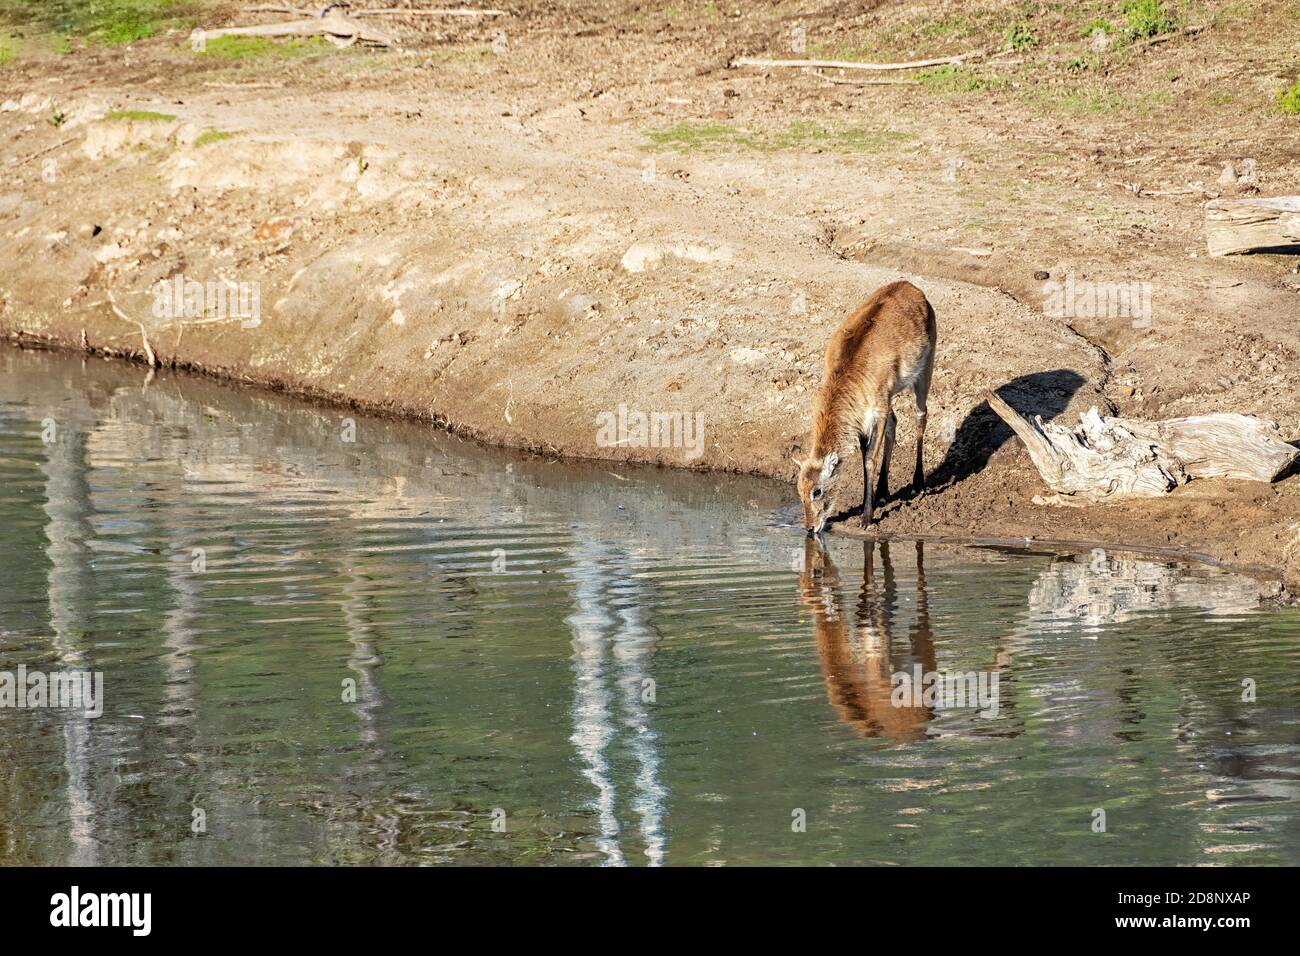 Un ciervo bebiendo agua de un lago. Foto de stock